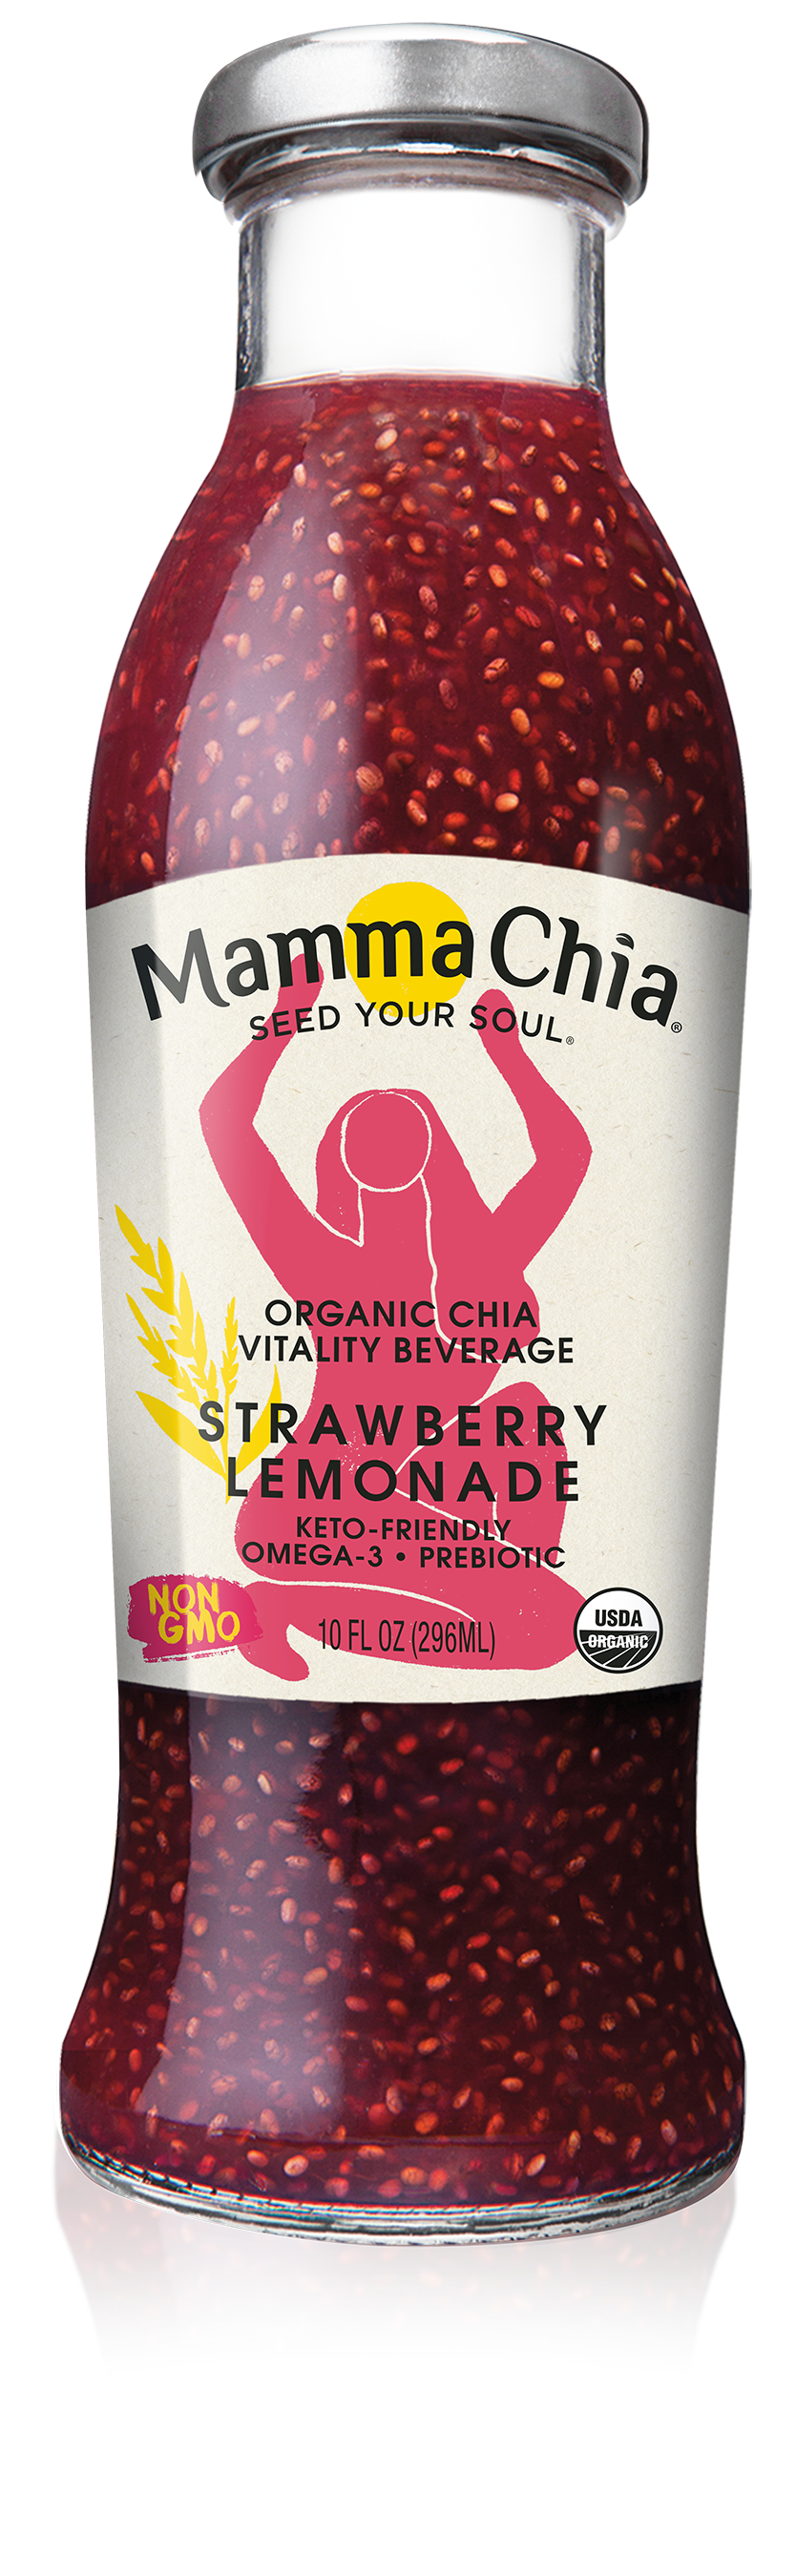 Mamma Chia Strawberry Lemonade Organic Chia Beverage 12 units per case 10.0 fl